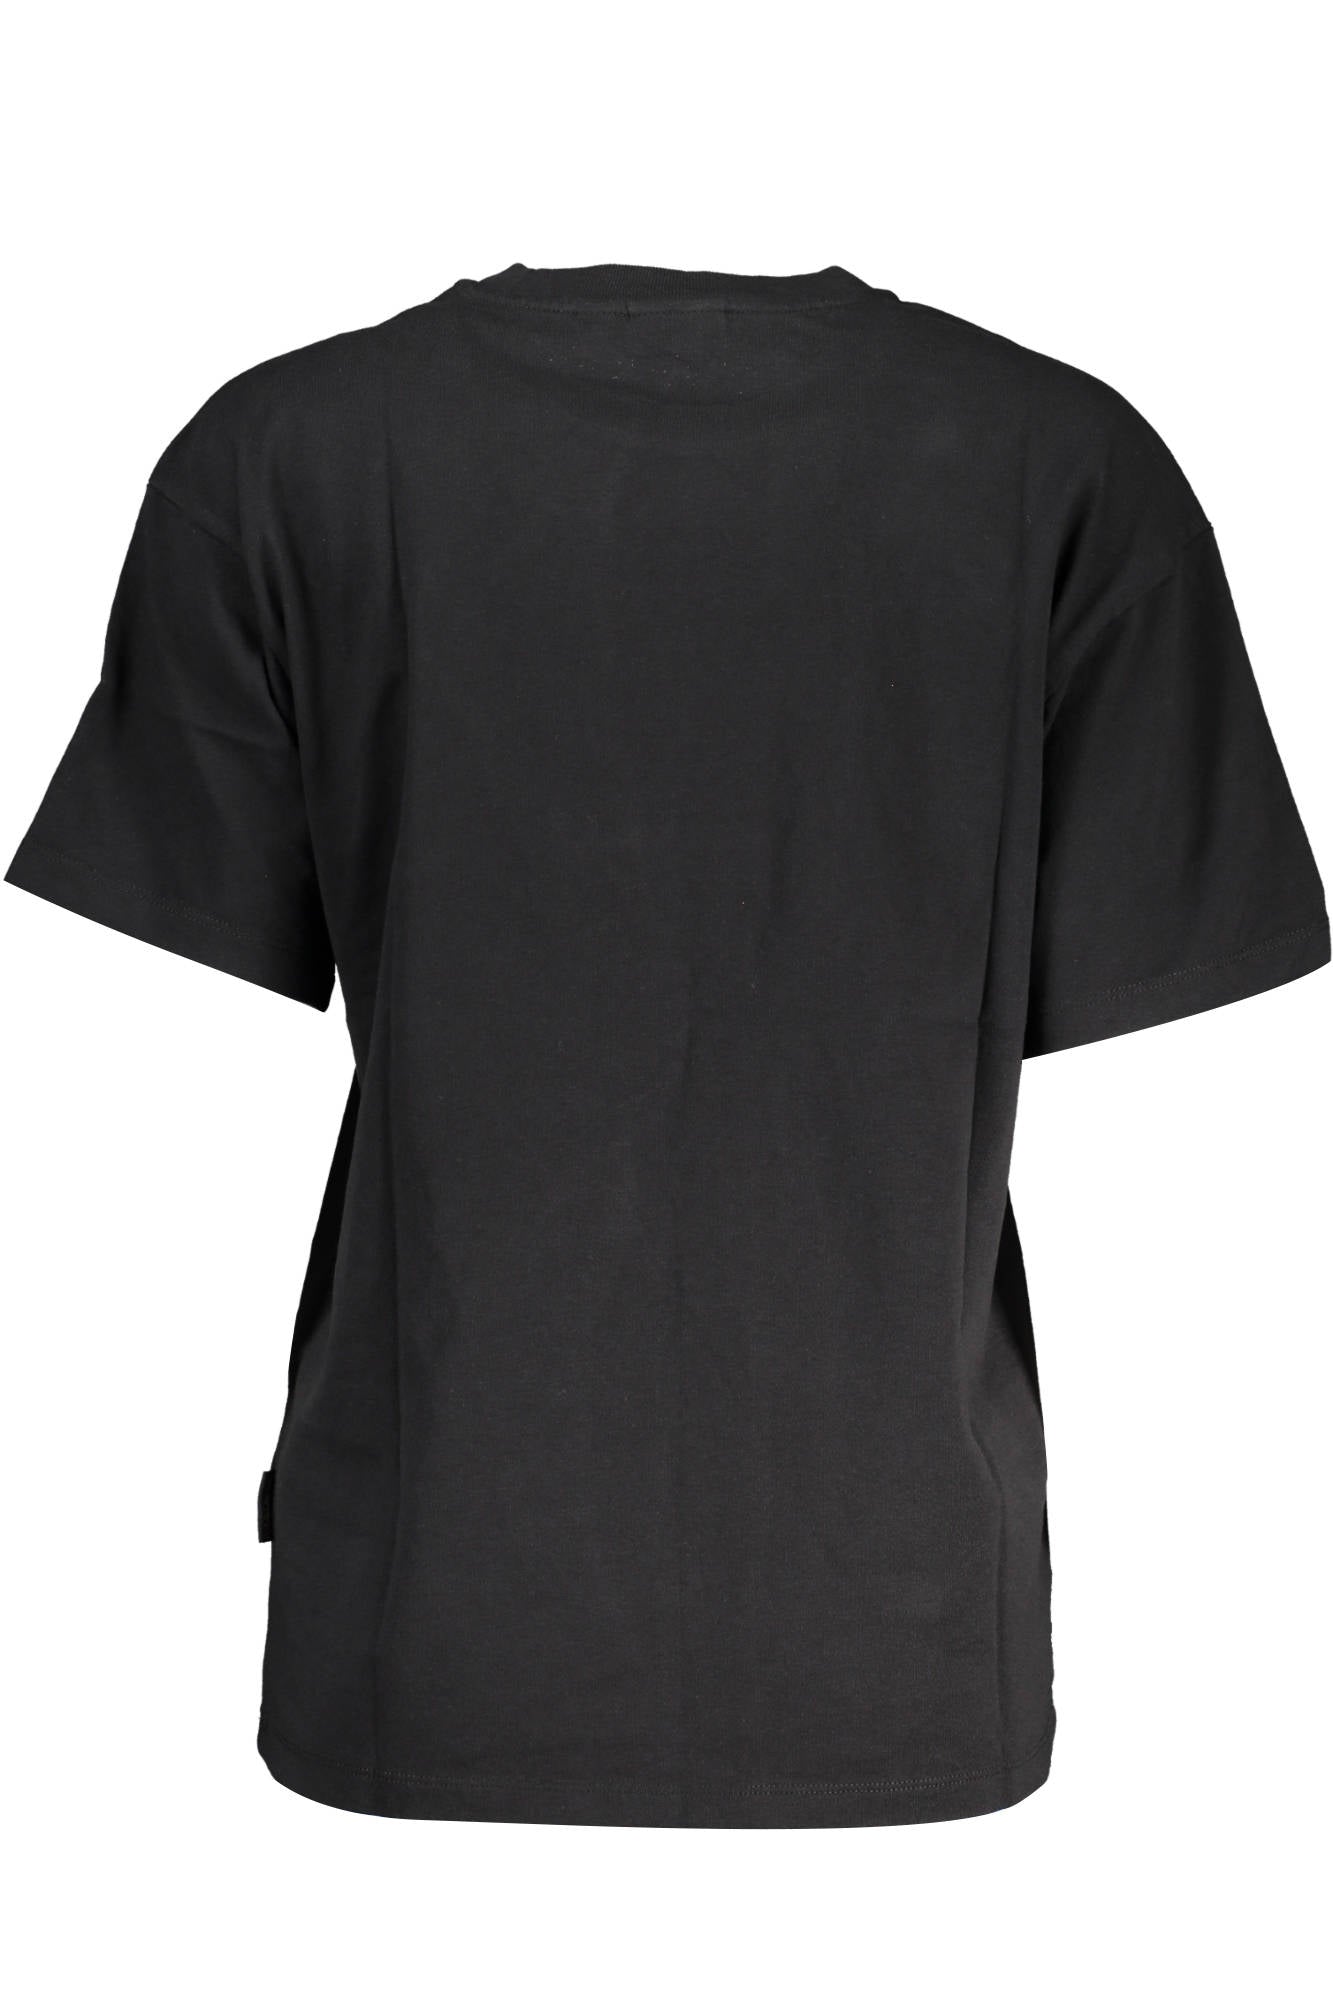 Napapijri Black Cotton Tops & T-Shirt - Fizigo